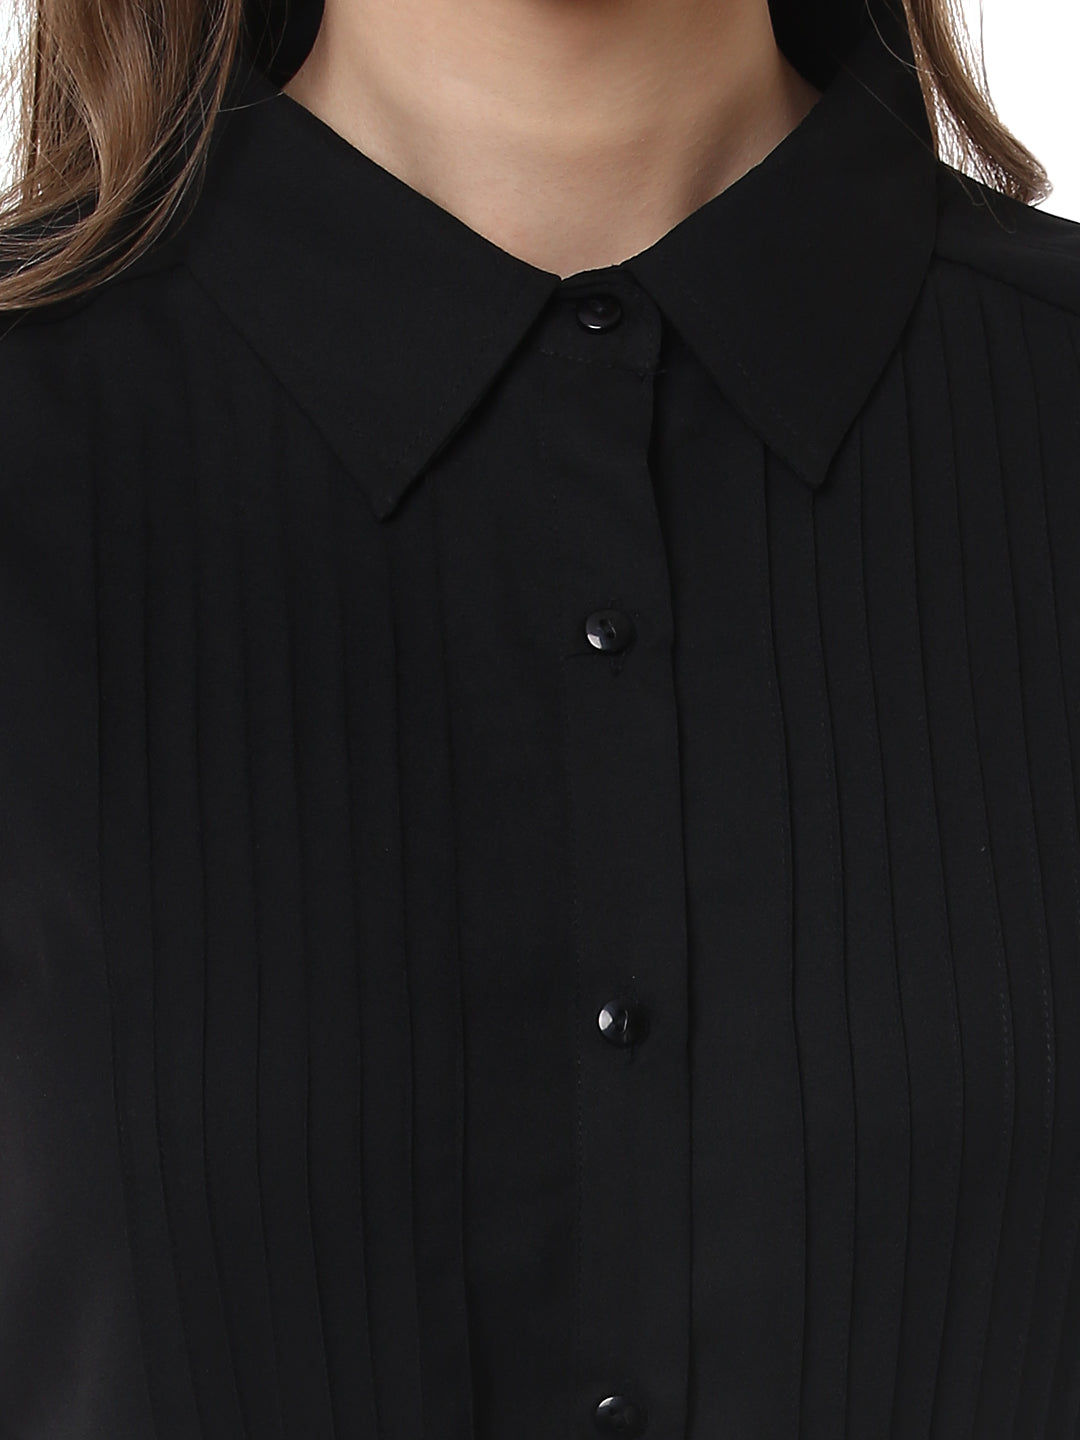 Women's Black Polyester Midi Dress - StyleStone